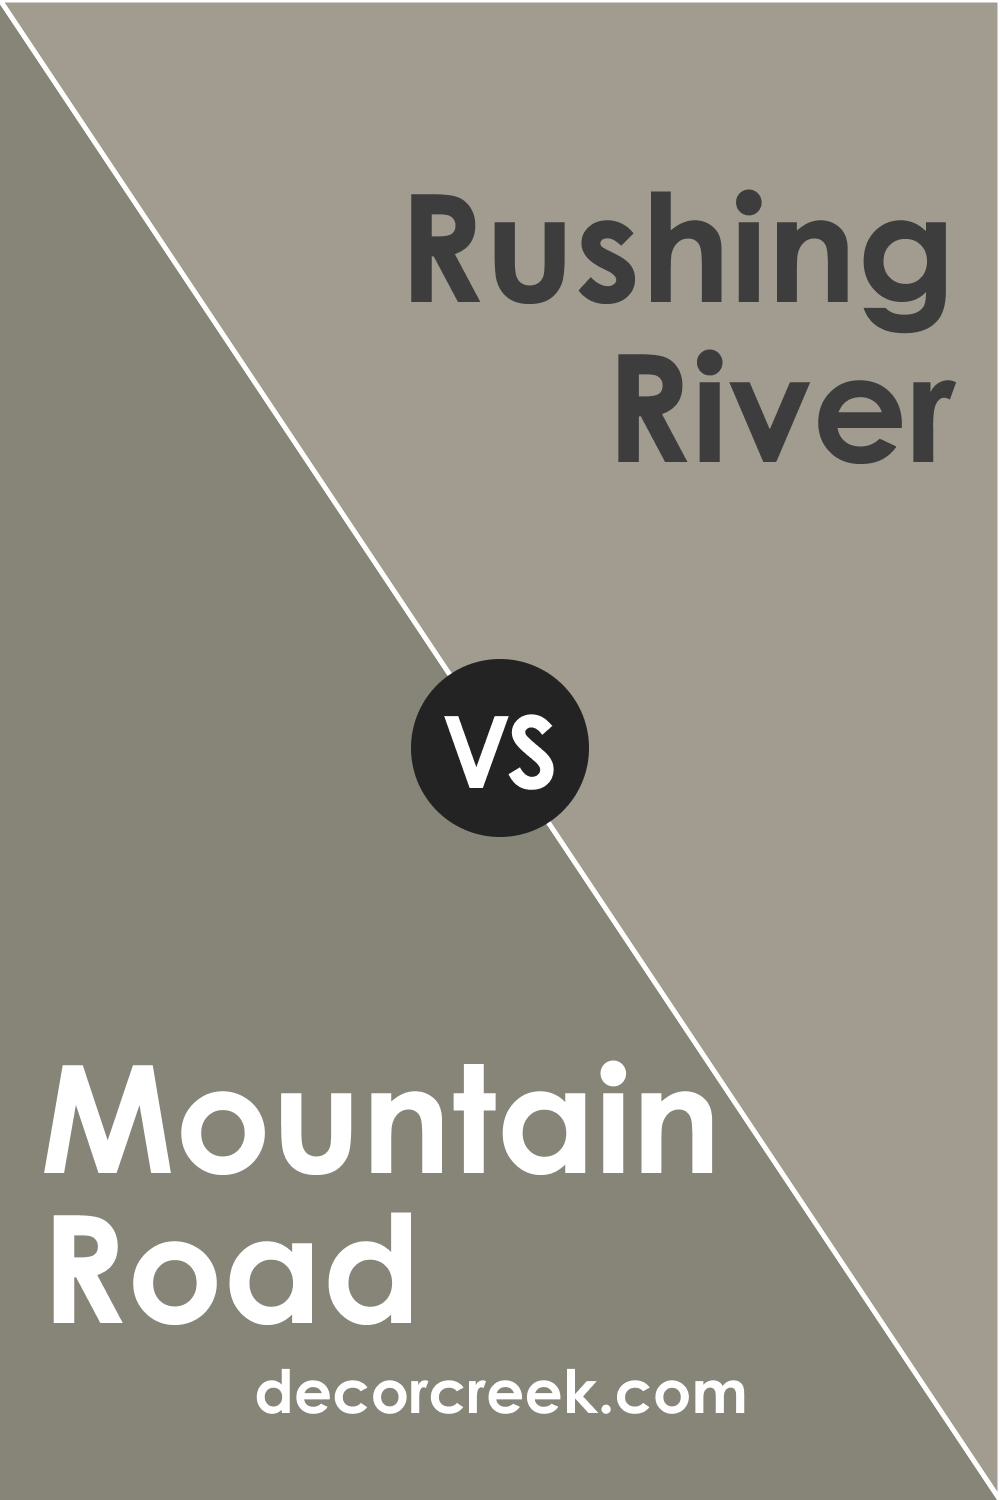 SW 7743 Mountain Road vs. SW Rushing River